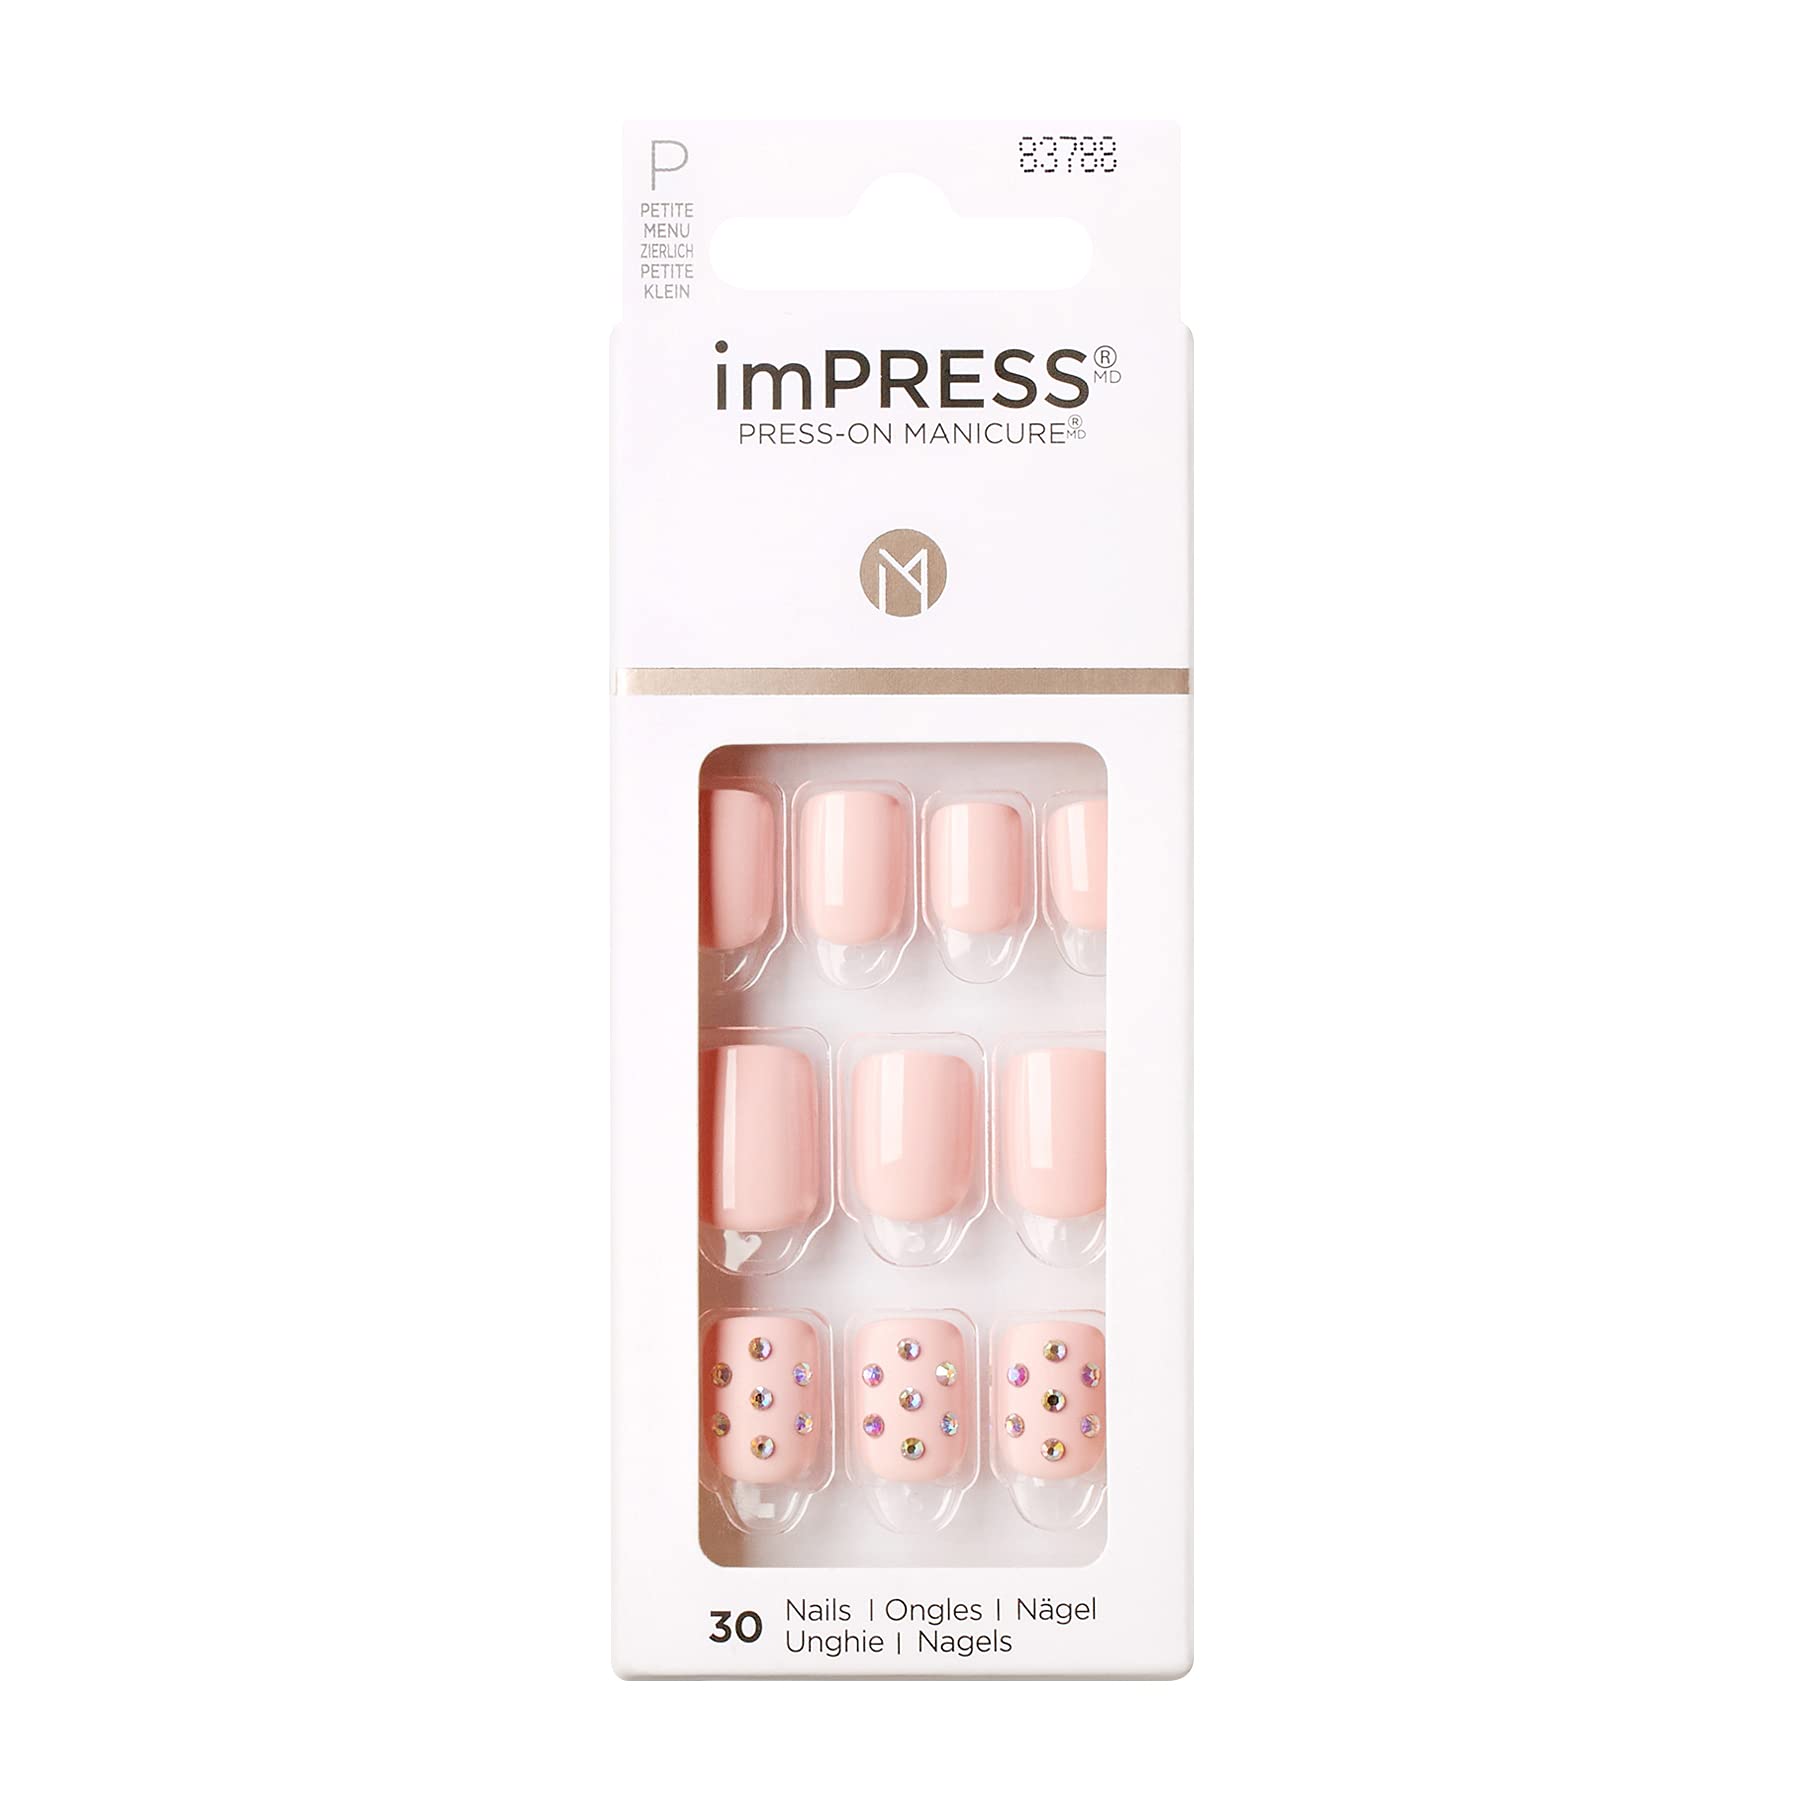 KISS imPRESS Press-On Manicure Nail Kit PureFit Technology Petite Length  Press-On Nails Petite Secrets' Includes Prep Pad Mini Nail File Cuticle  Stick and 30 Fake Nails